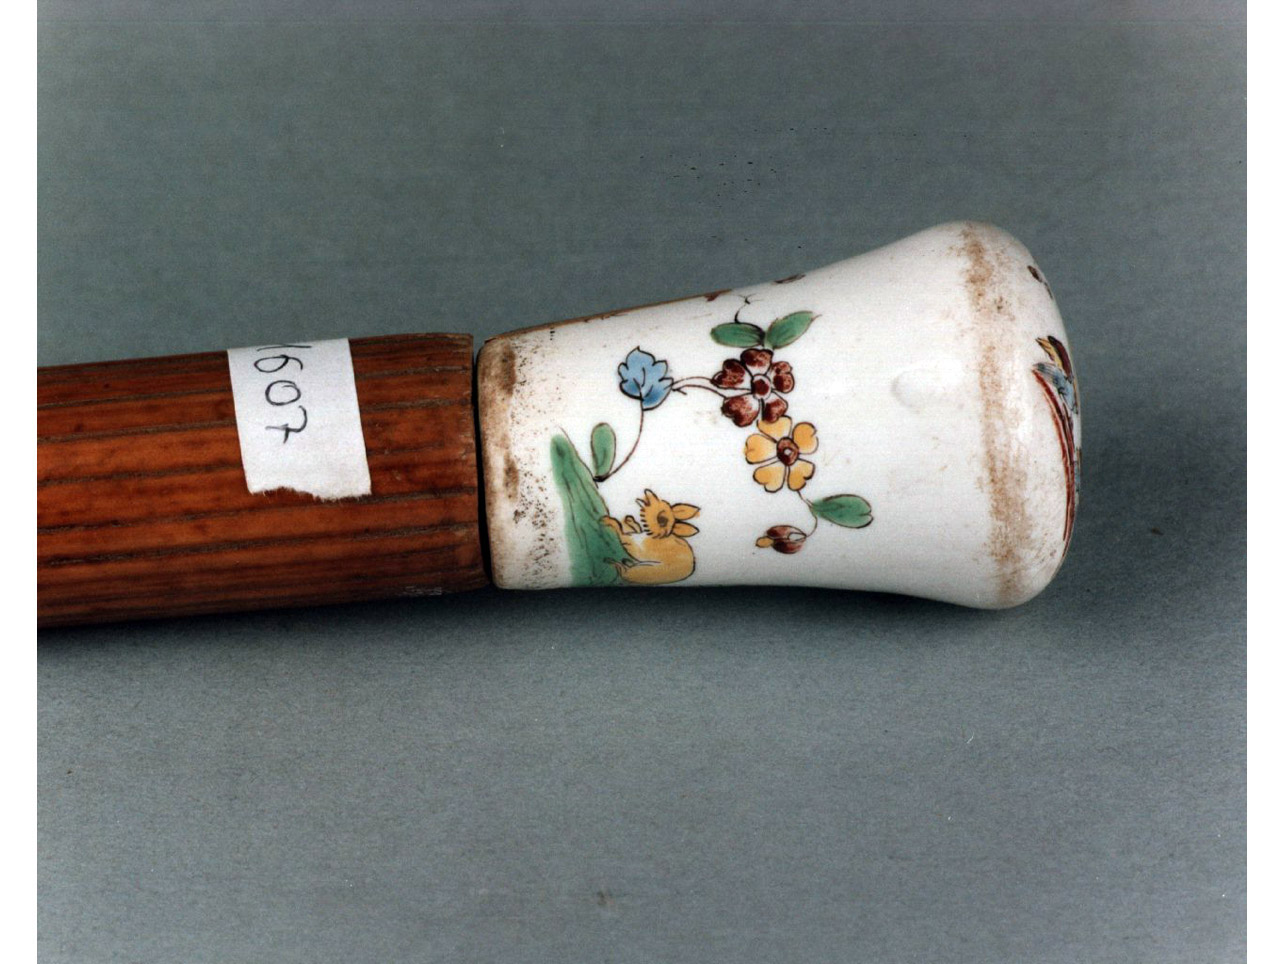 motivi decorativi vegetali e animali (bastone) - manifattura francese (sec. XVIII)